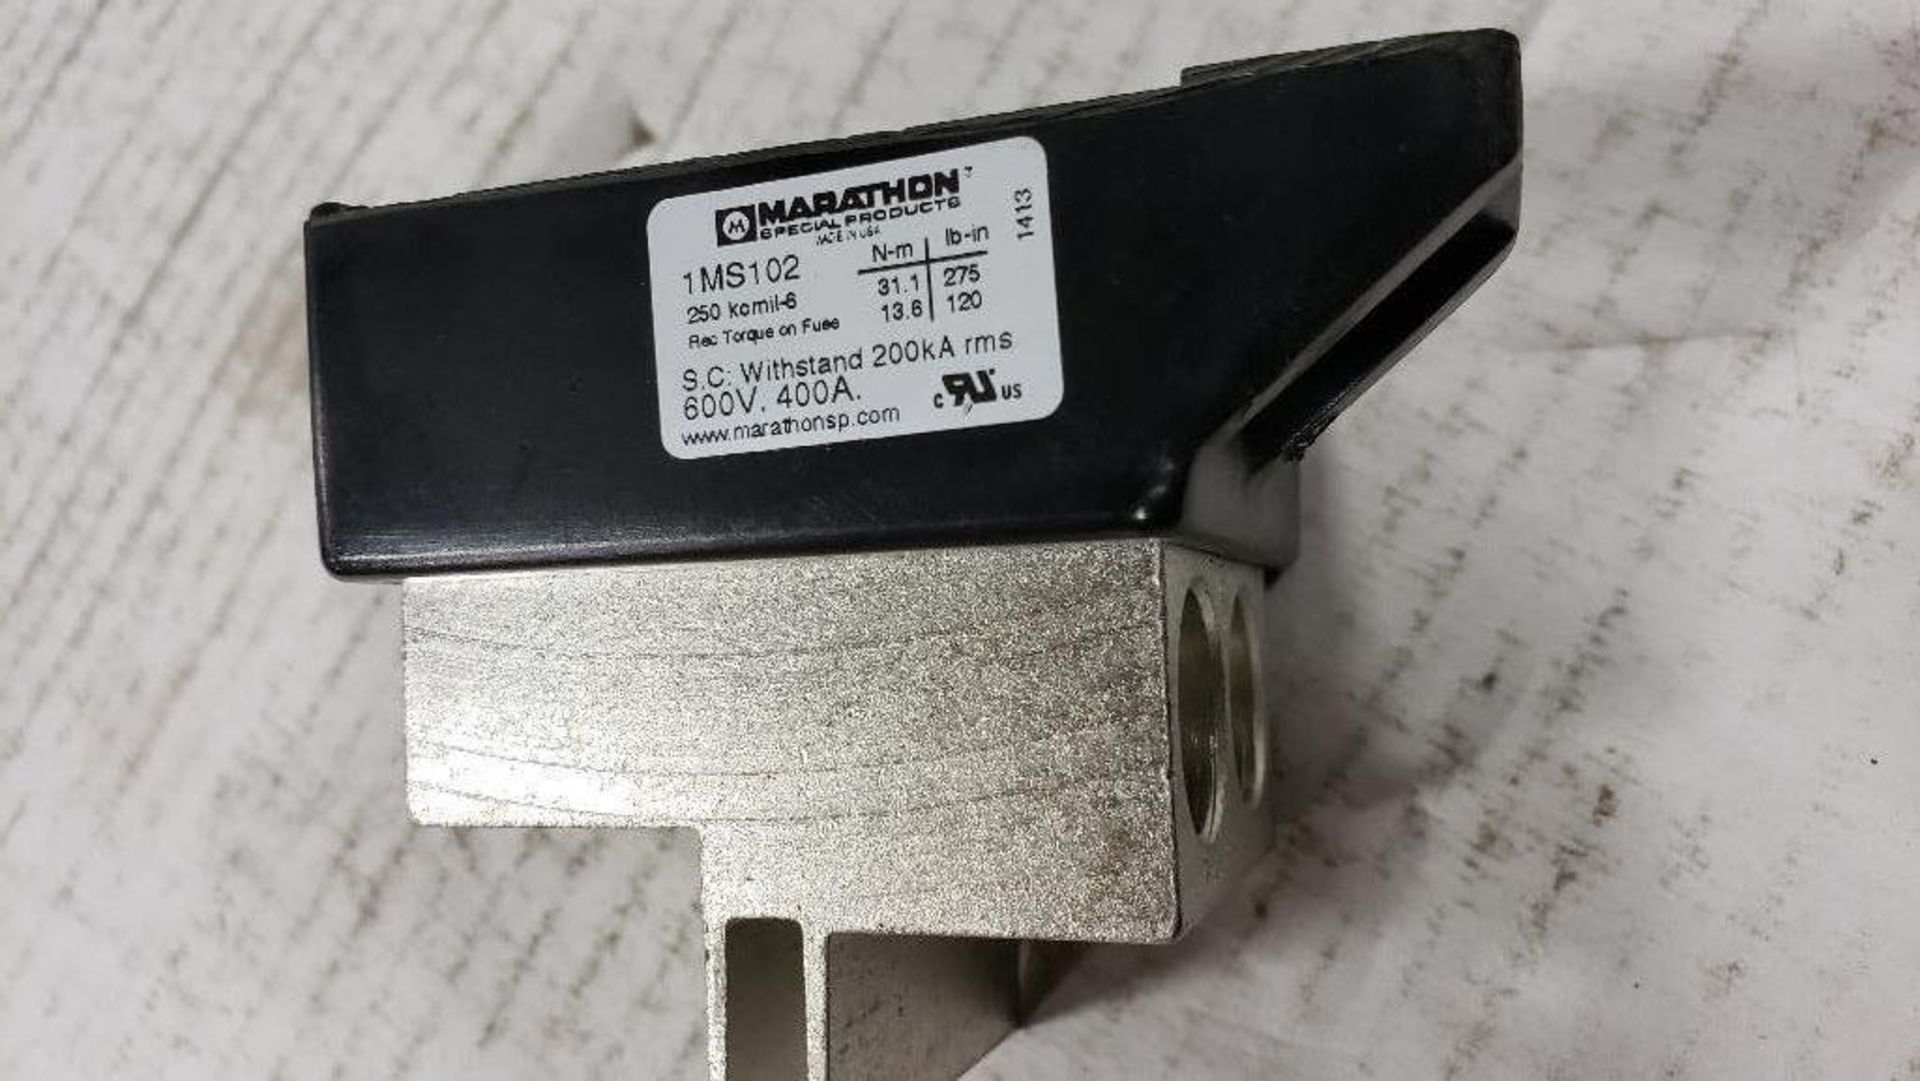 Qty 40 - Marathon fuse holder. 600v, 400amp. Catalog 1MS102. New in bulk box. - Image 3 of 3